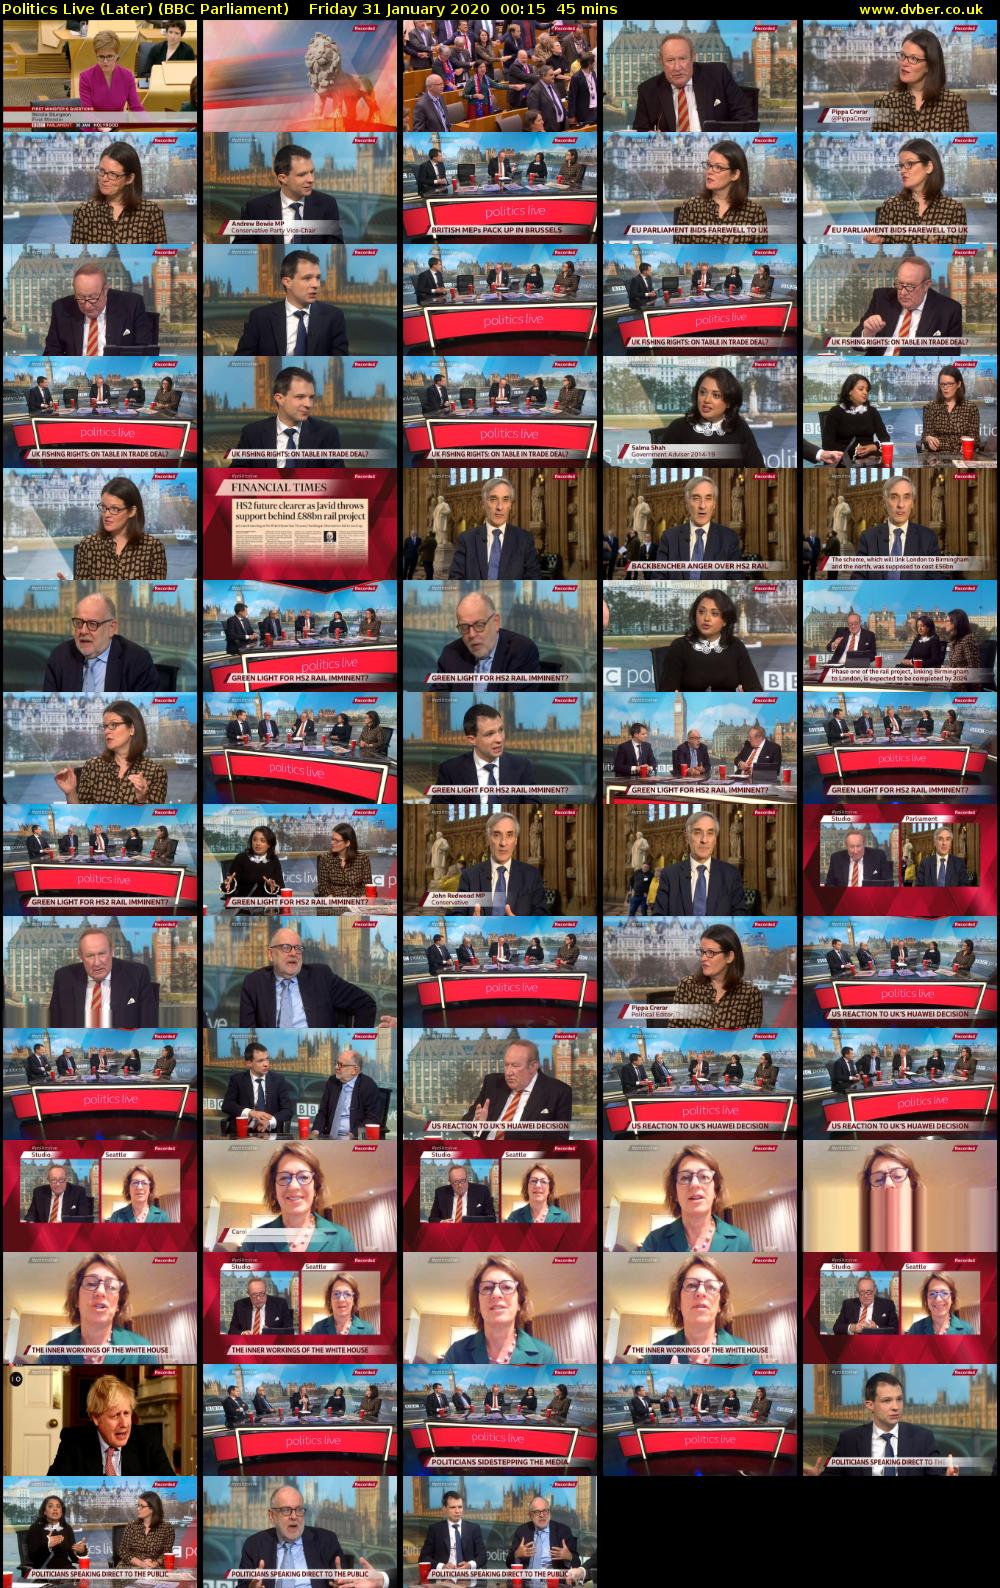 Politics Live (Later) (BBC Parliament) Friday 31 January 2020 00:15 - 01:00